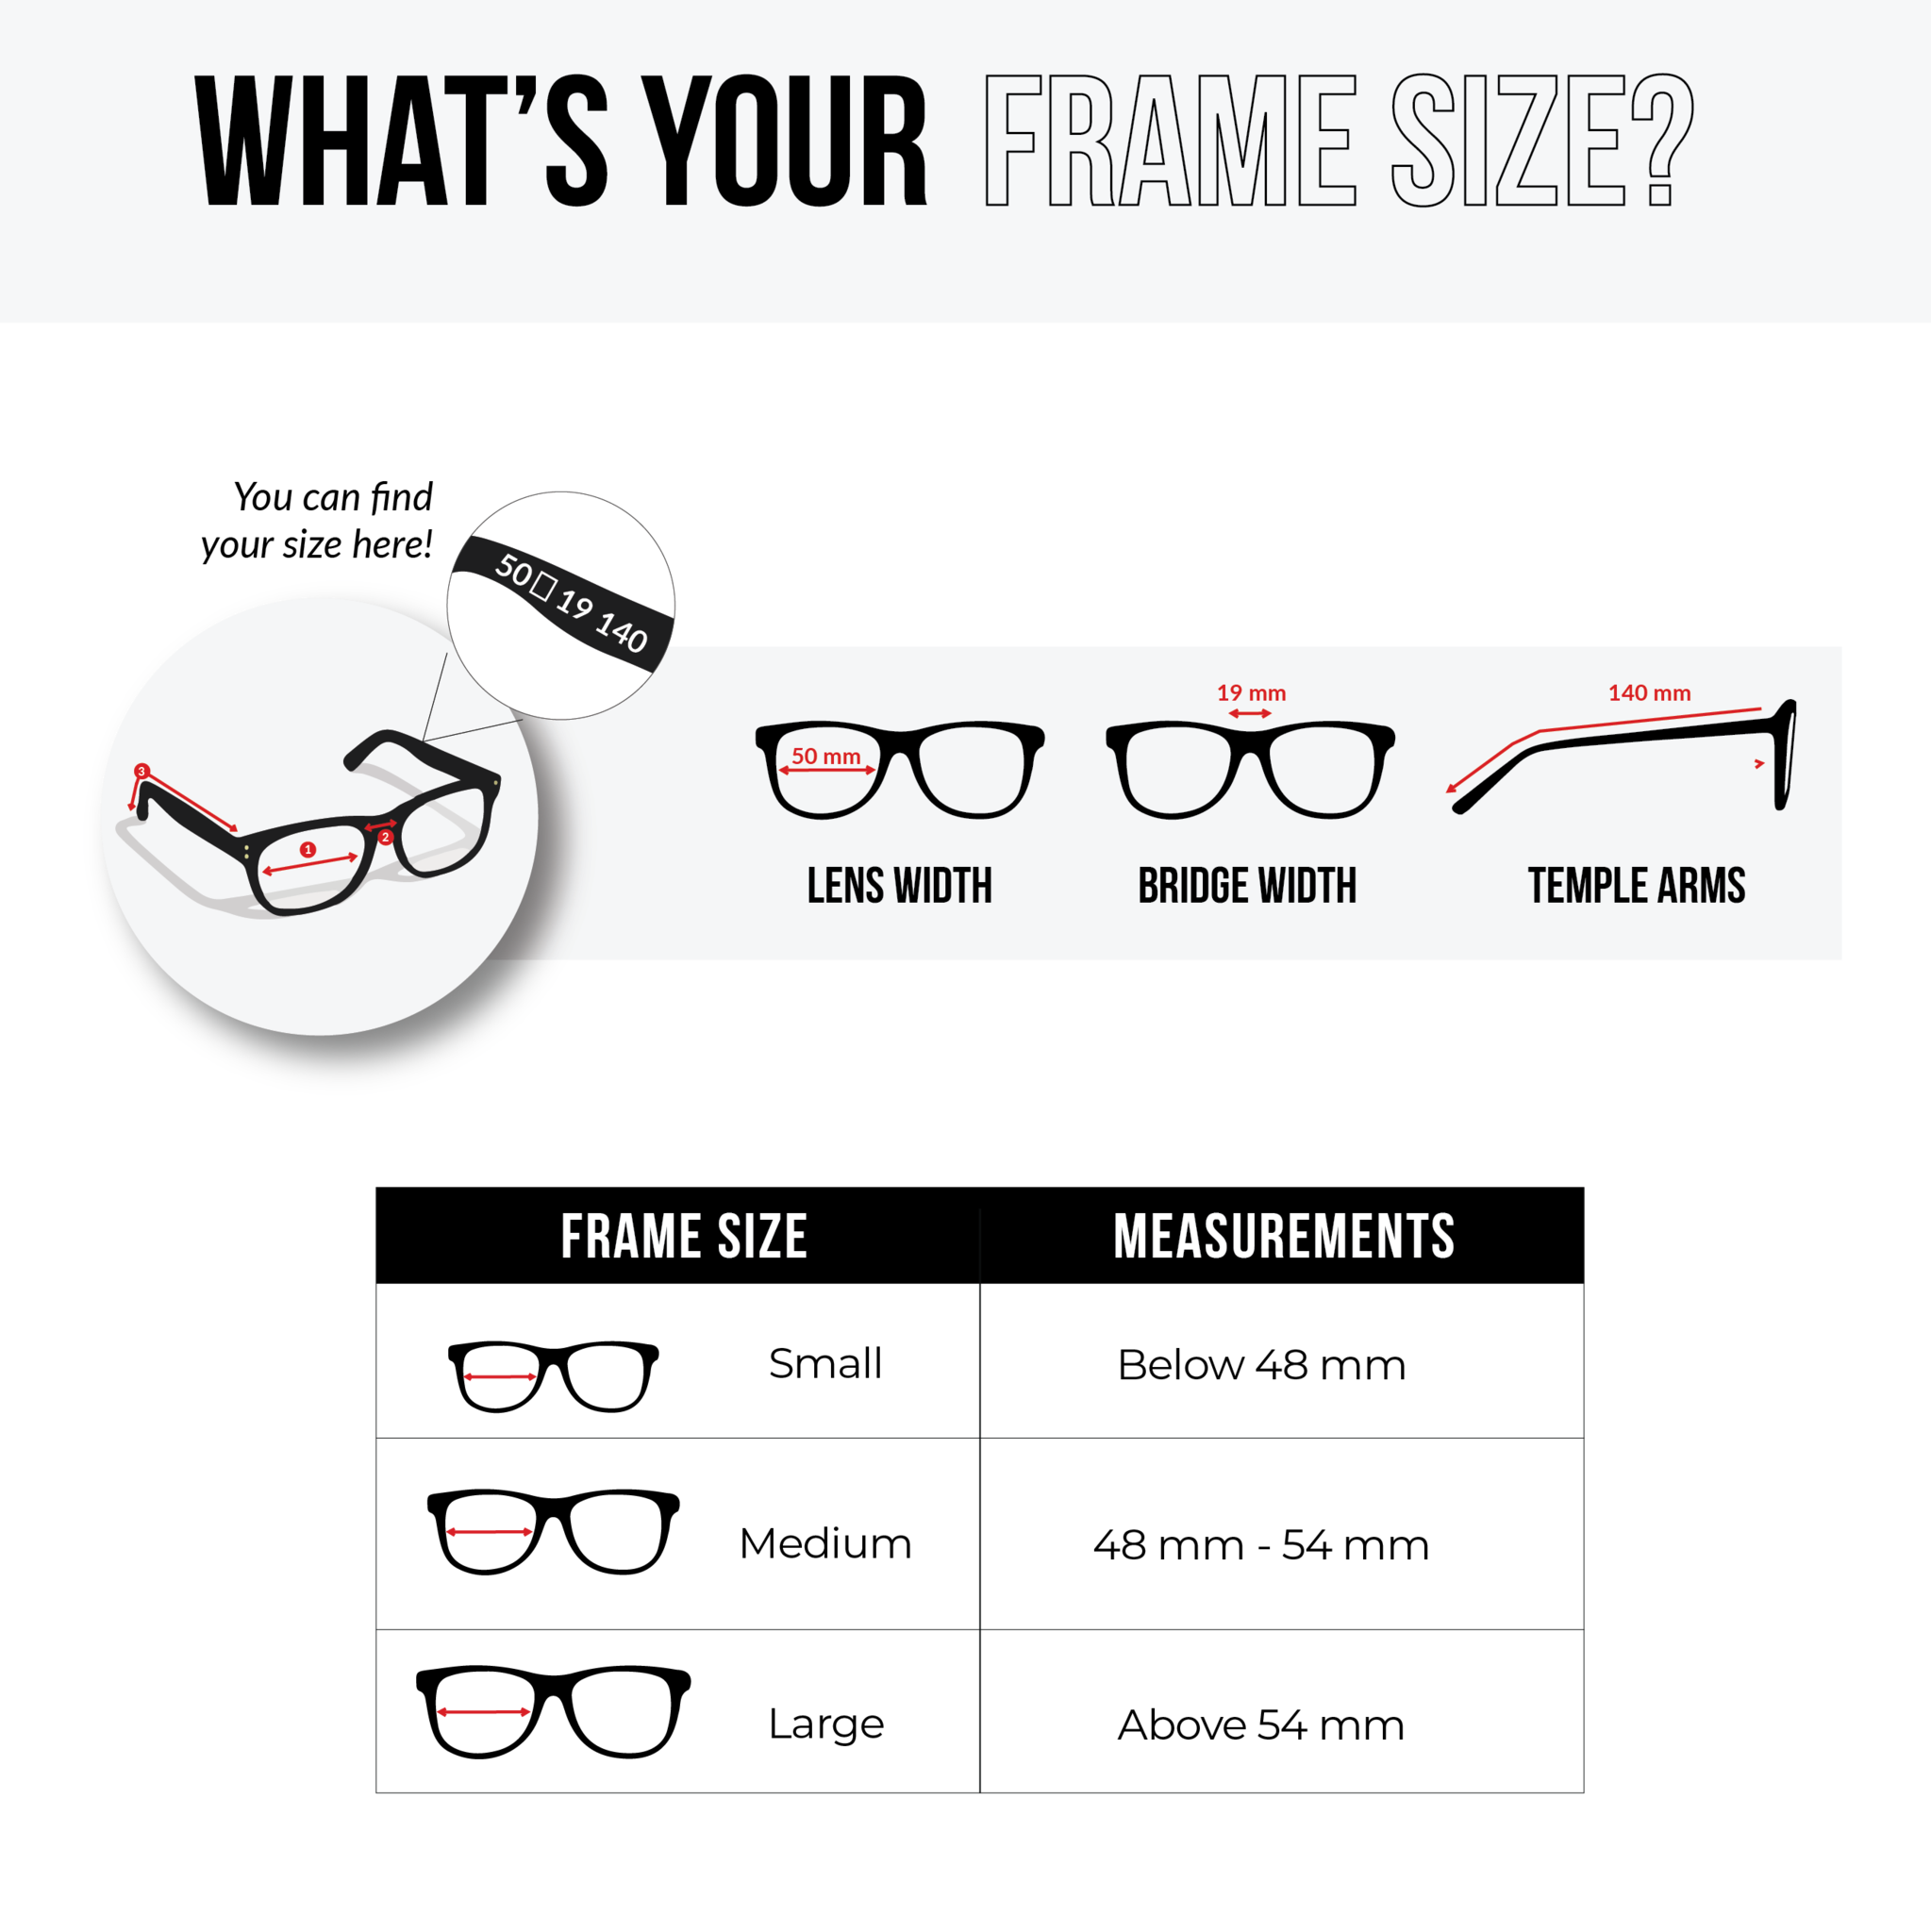 NS Deluxe - 72024  - Black - Eyeglasses